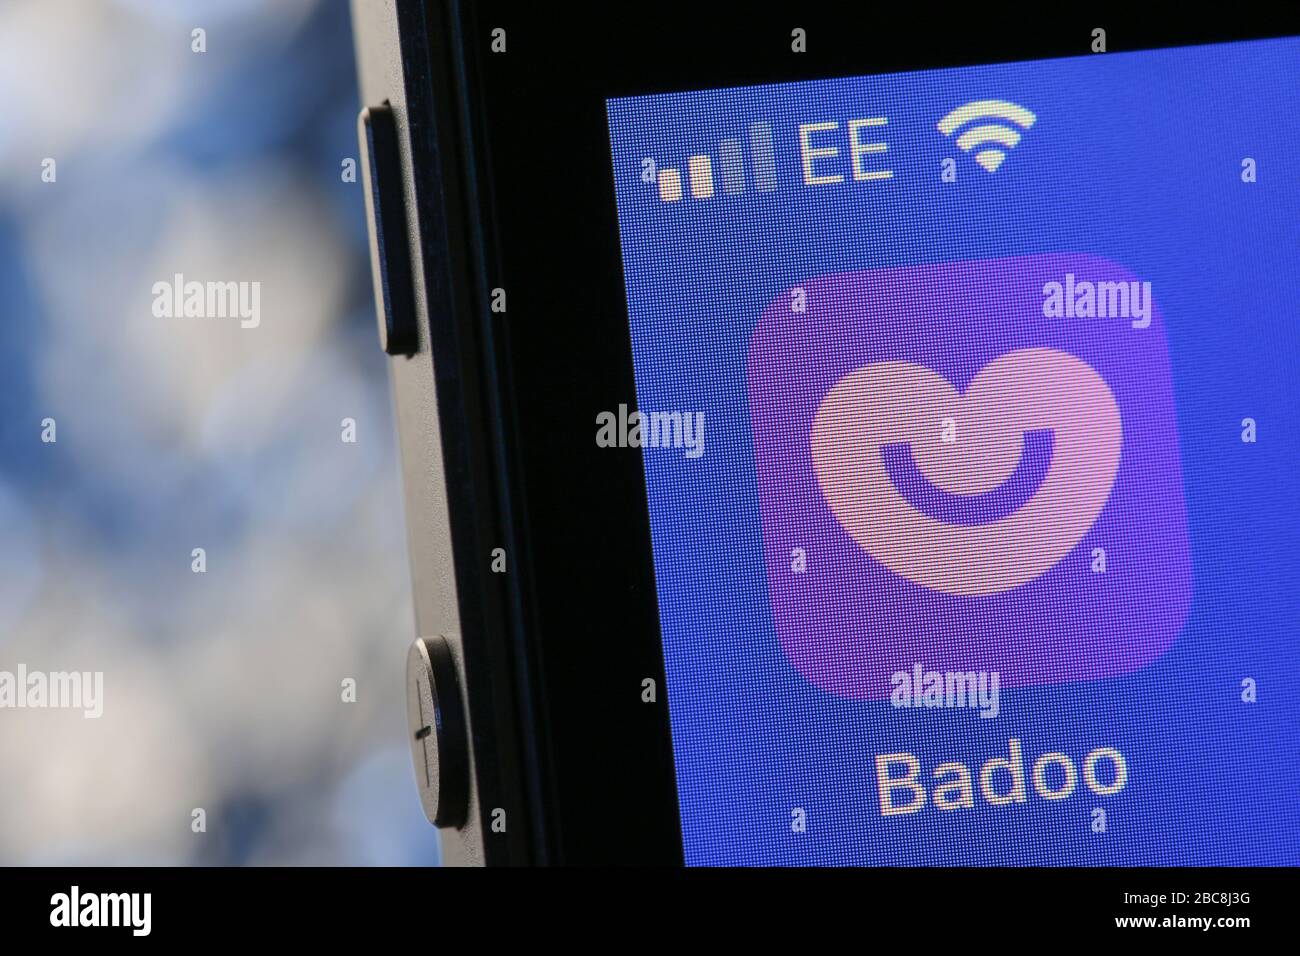 Badoo dating app on an iPhone. Stock Photo